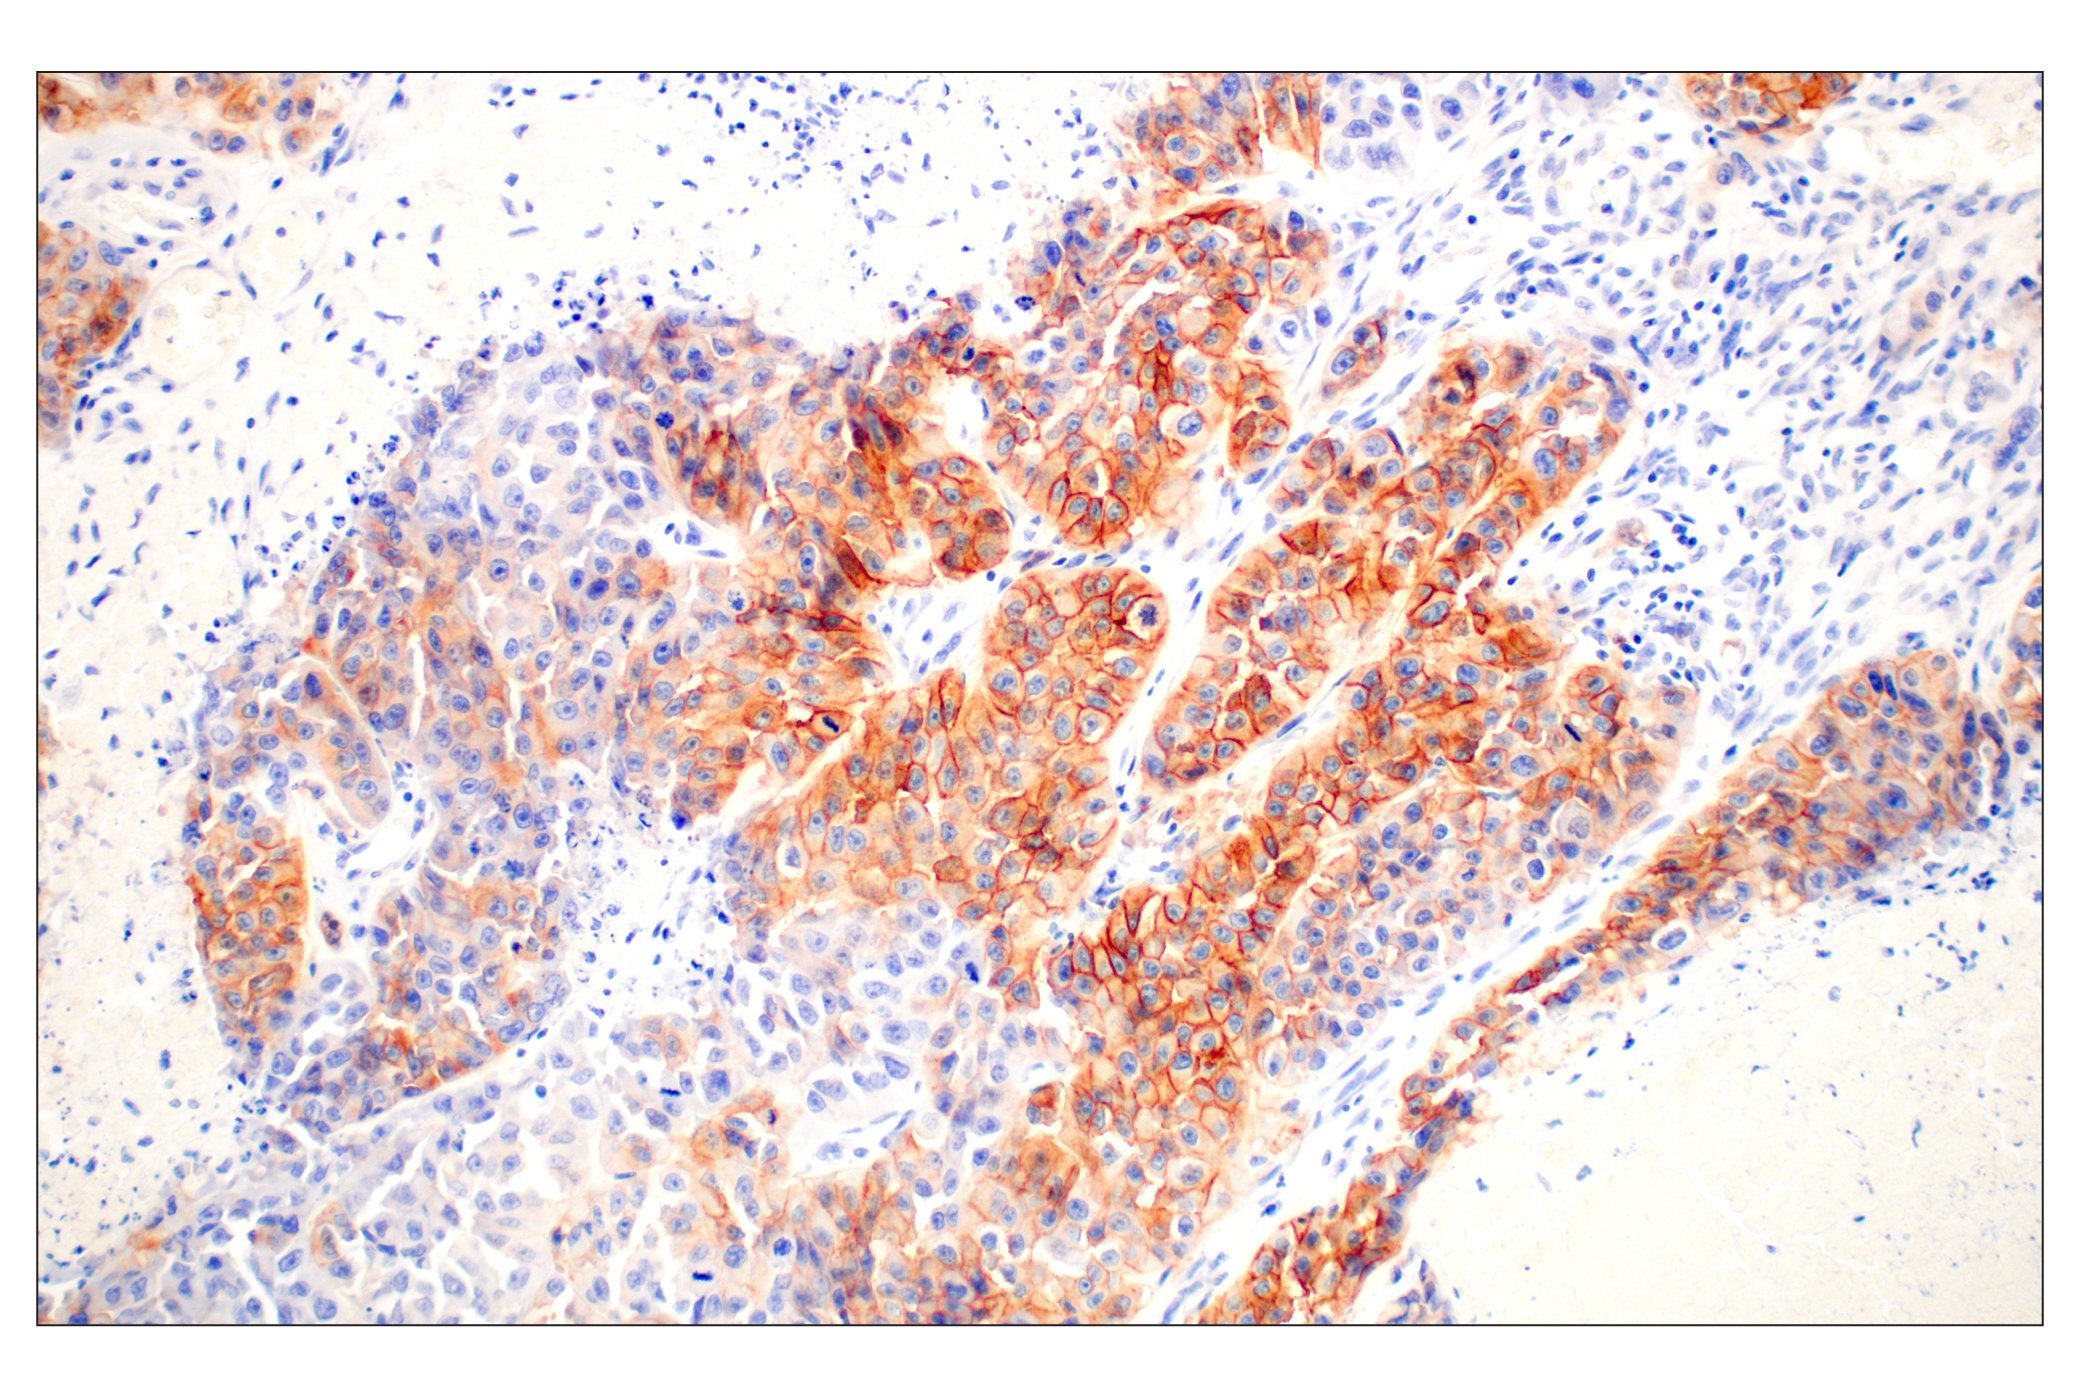  Image 9: PhosphoPlus® EGFR (Tyr1068) Antibody Duet